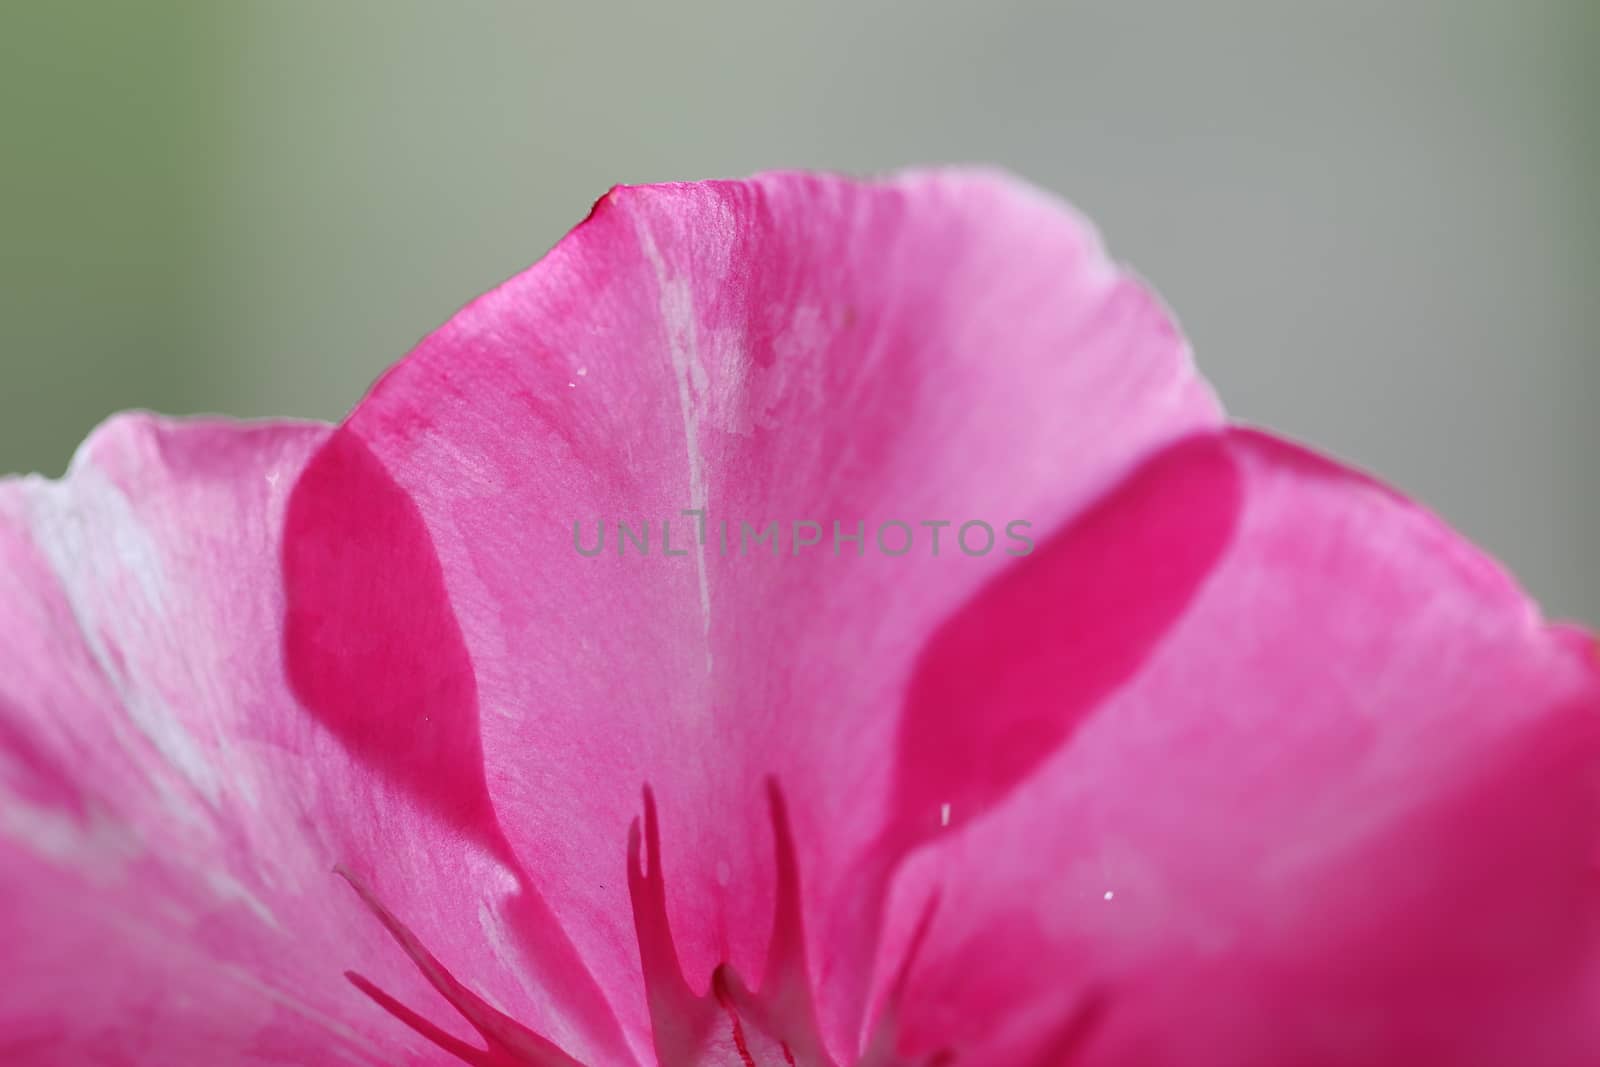 pink flower petals, oleander by 9500102400